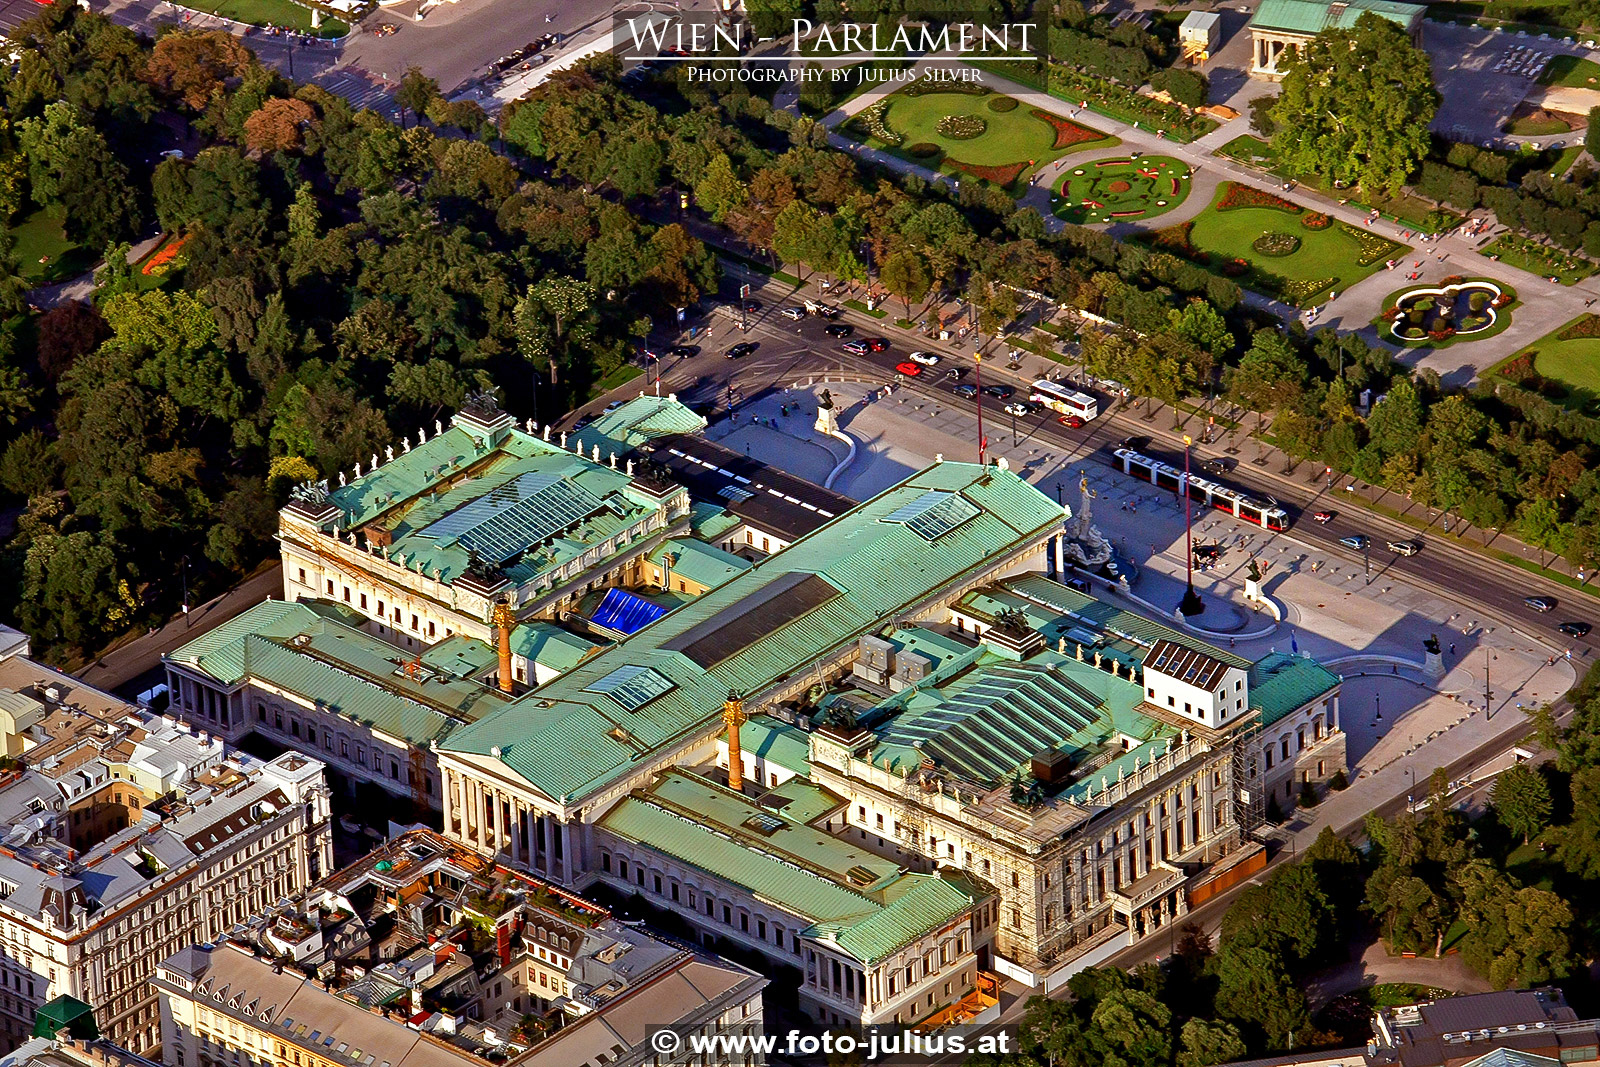 W3370a_Parlamment_Wien.JPG, 967kB